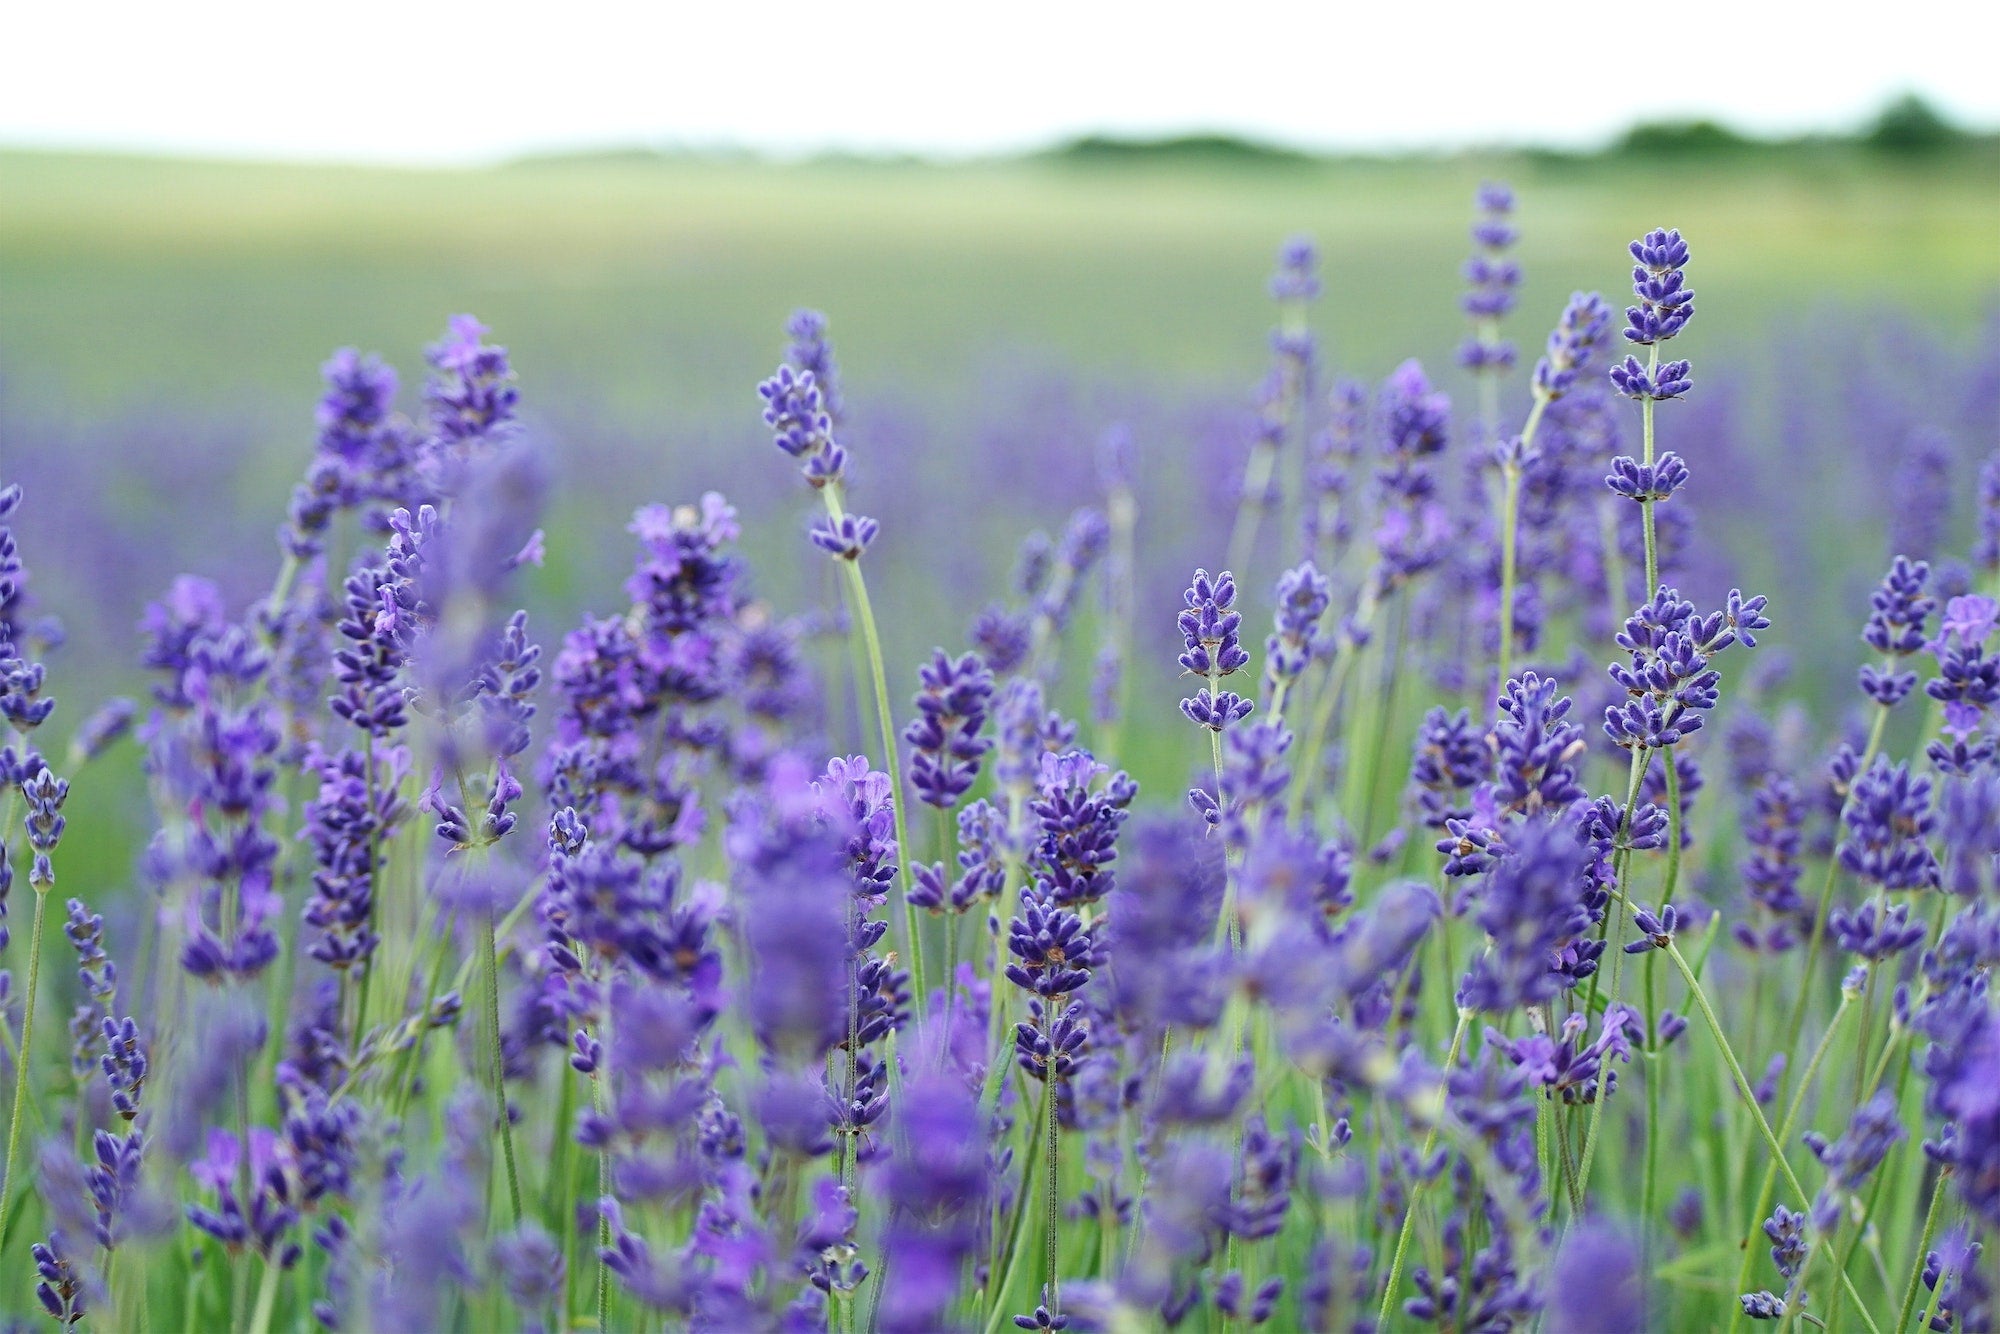 Lavender seeds grown into full lavender flowers in field